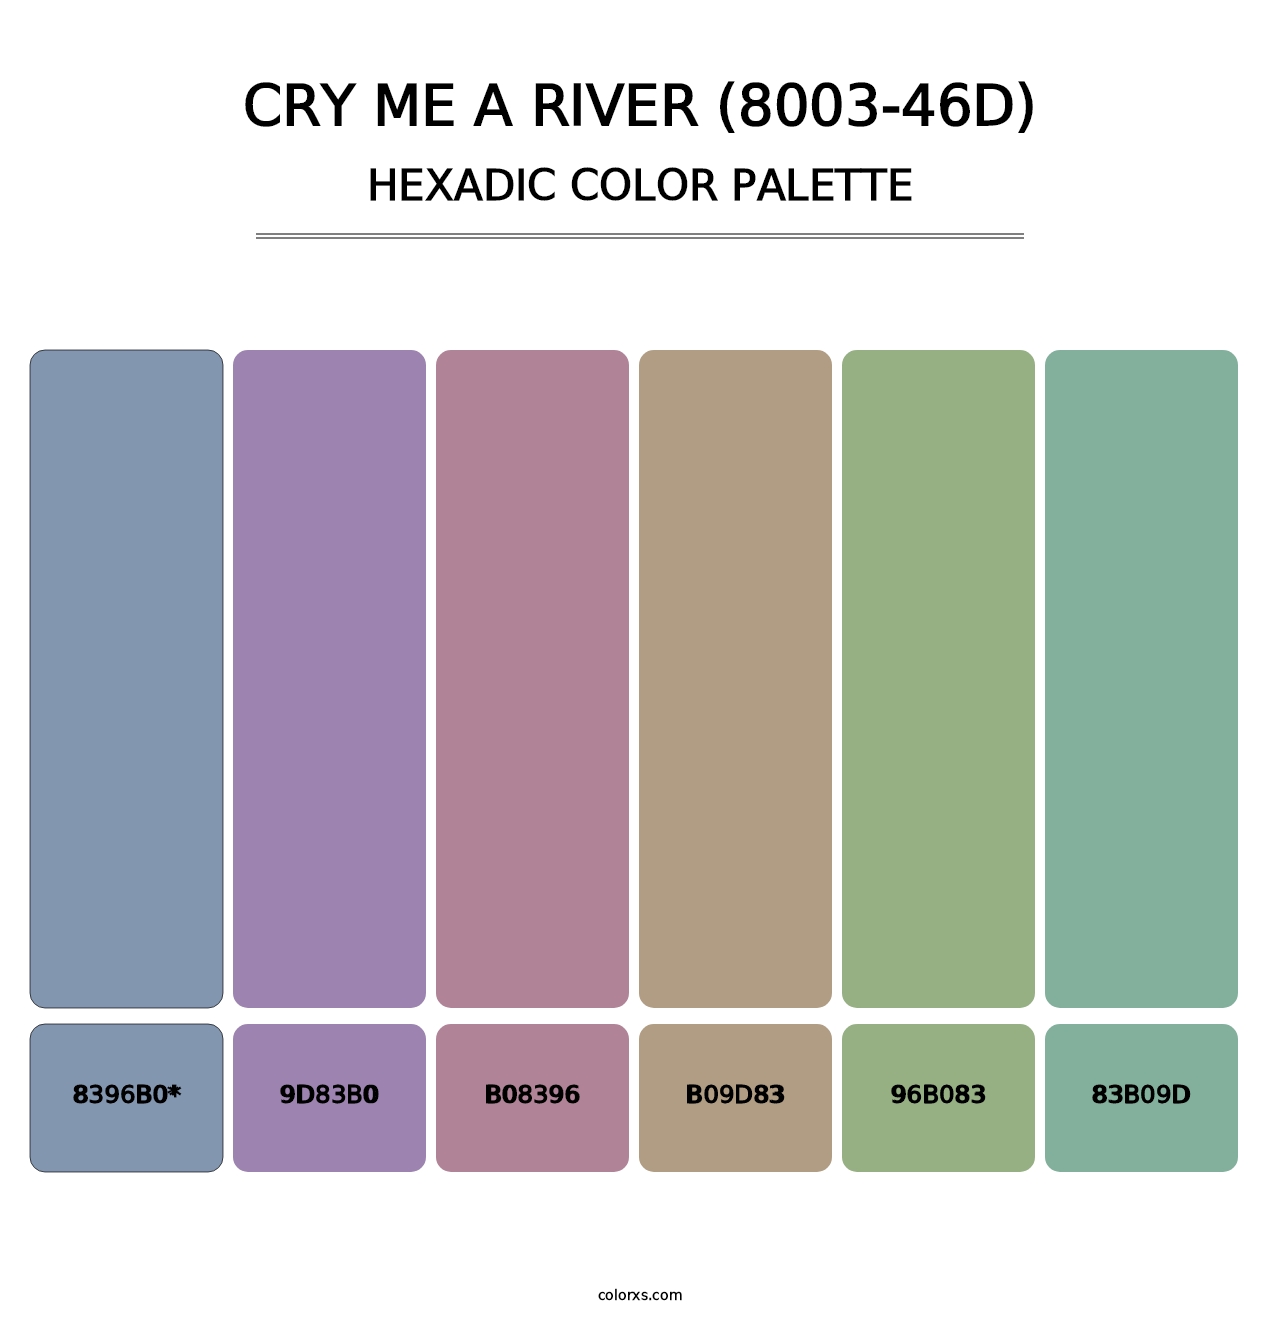 Cry Me a River (8003-46D) - Hexadic Color Palette